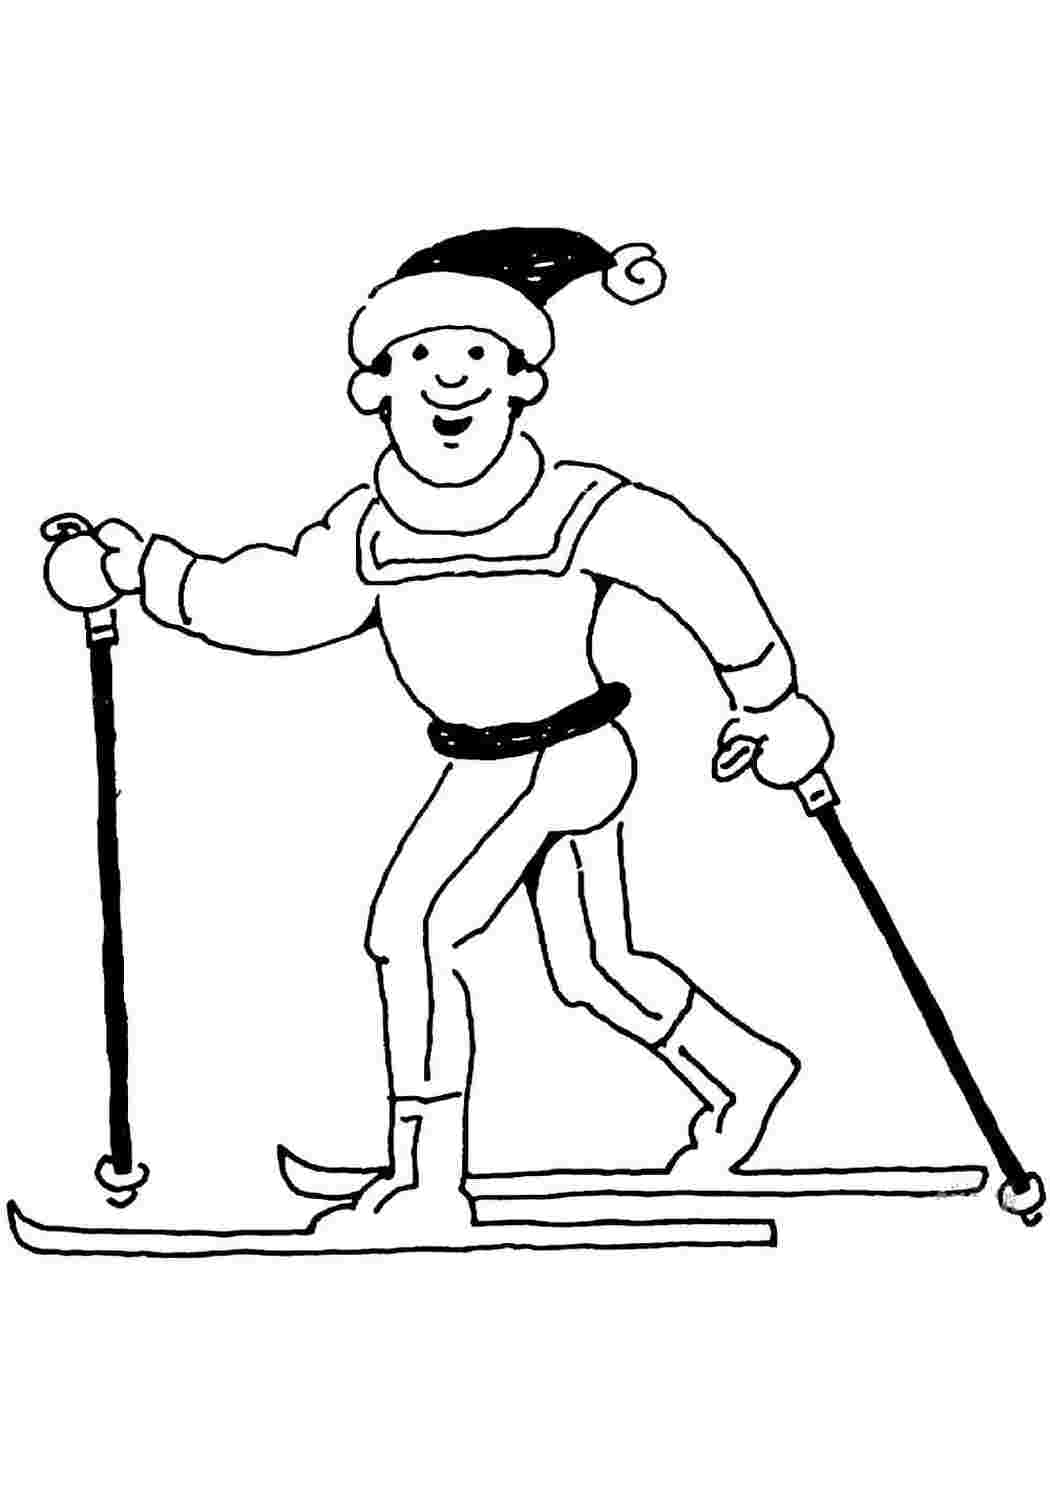 Раскраска гто. Лыжник раскраска. Лыжи раскраска. Лыжник раскраска для детей. Лыжи раскраска для детей.